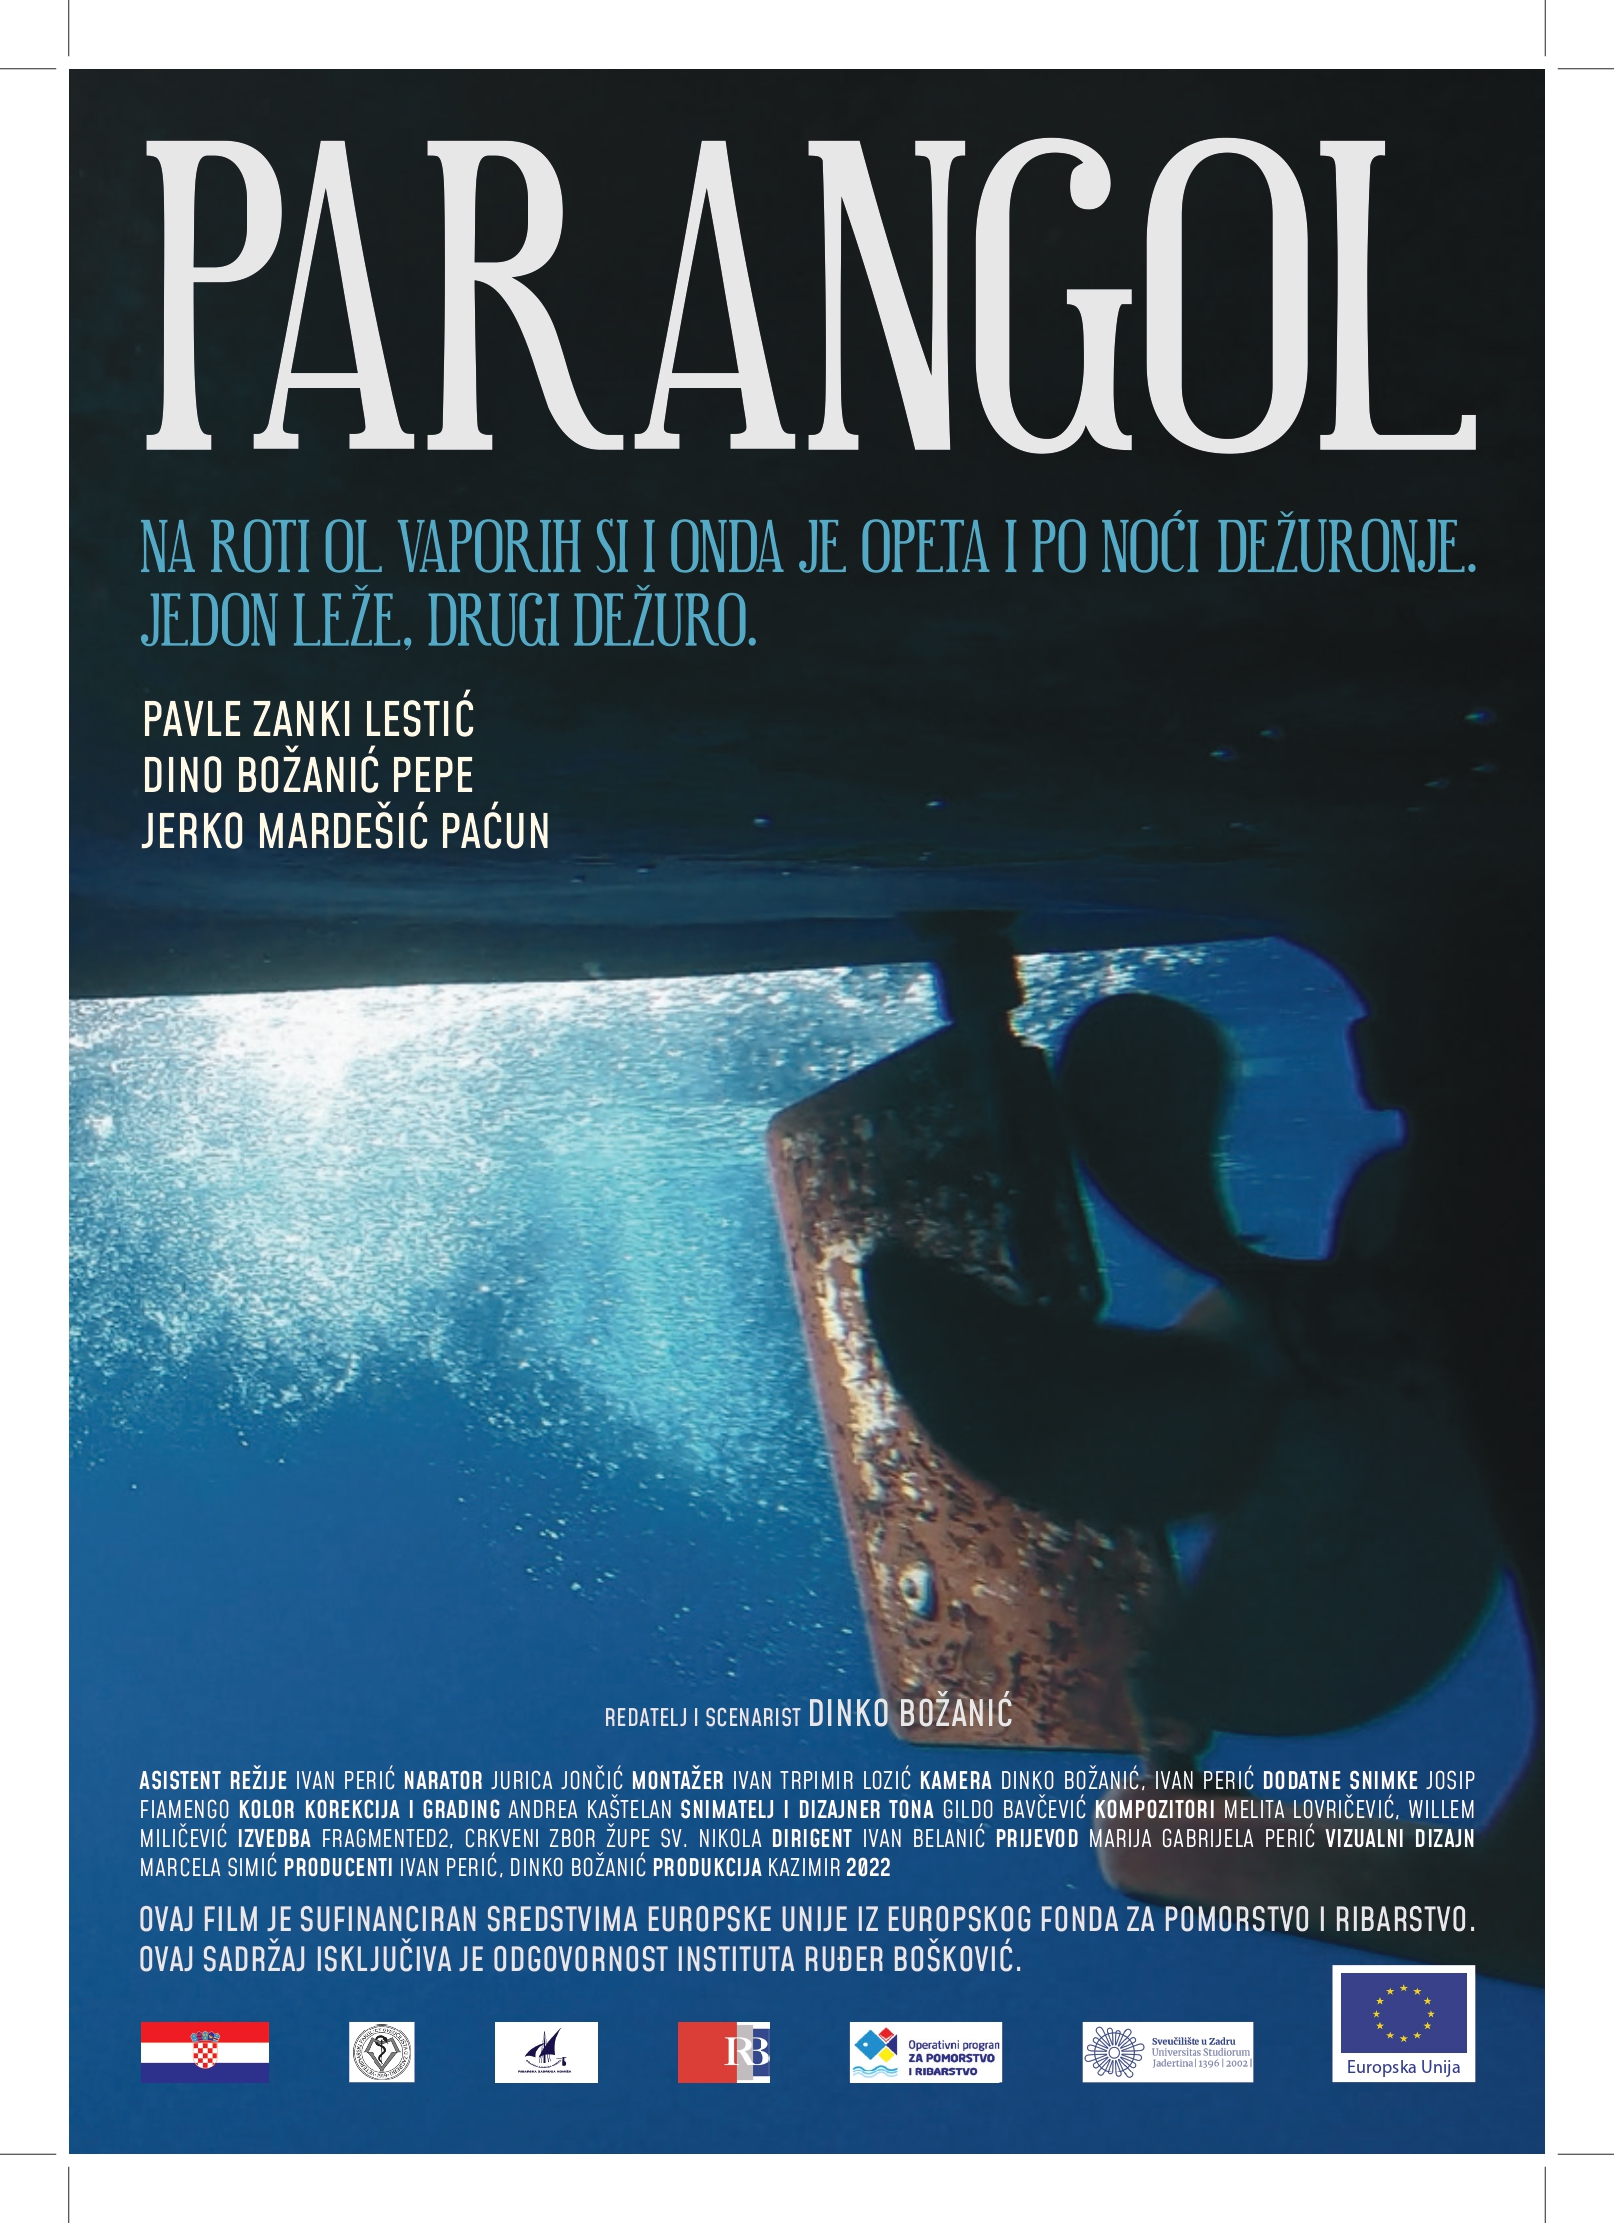 Na Institutu Ruđer Bošković premijerno prikazan dokumentarni film "Parangol"